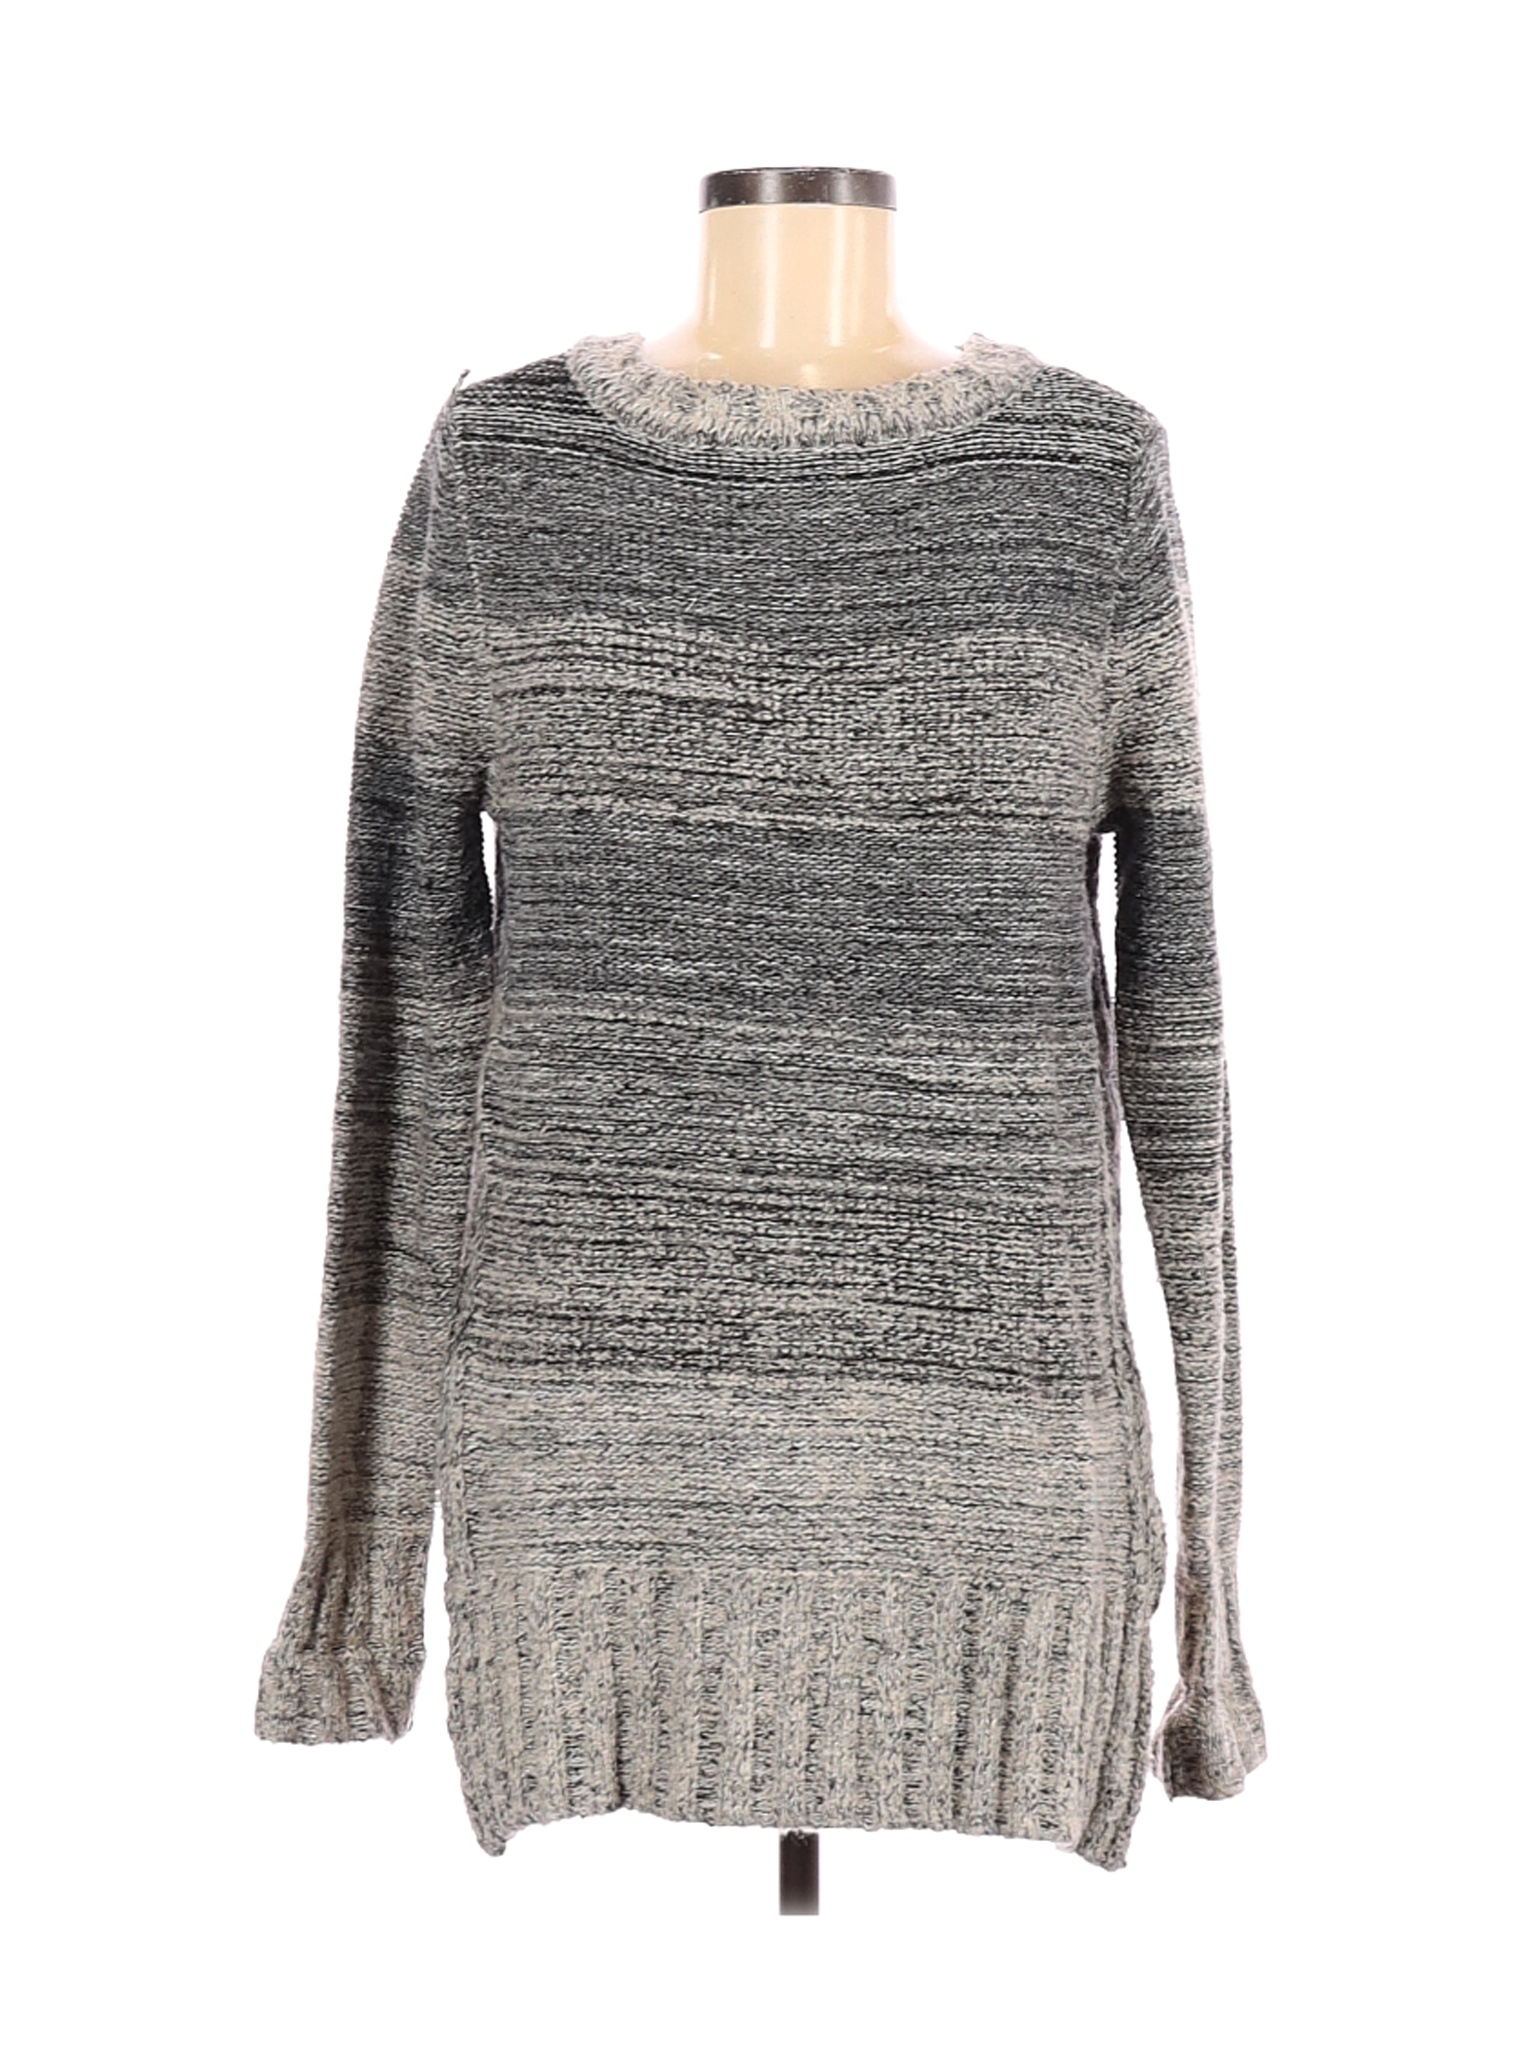 RD Style Women Gray Pullover Sweater S | eBay